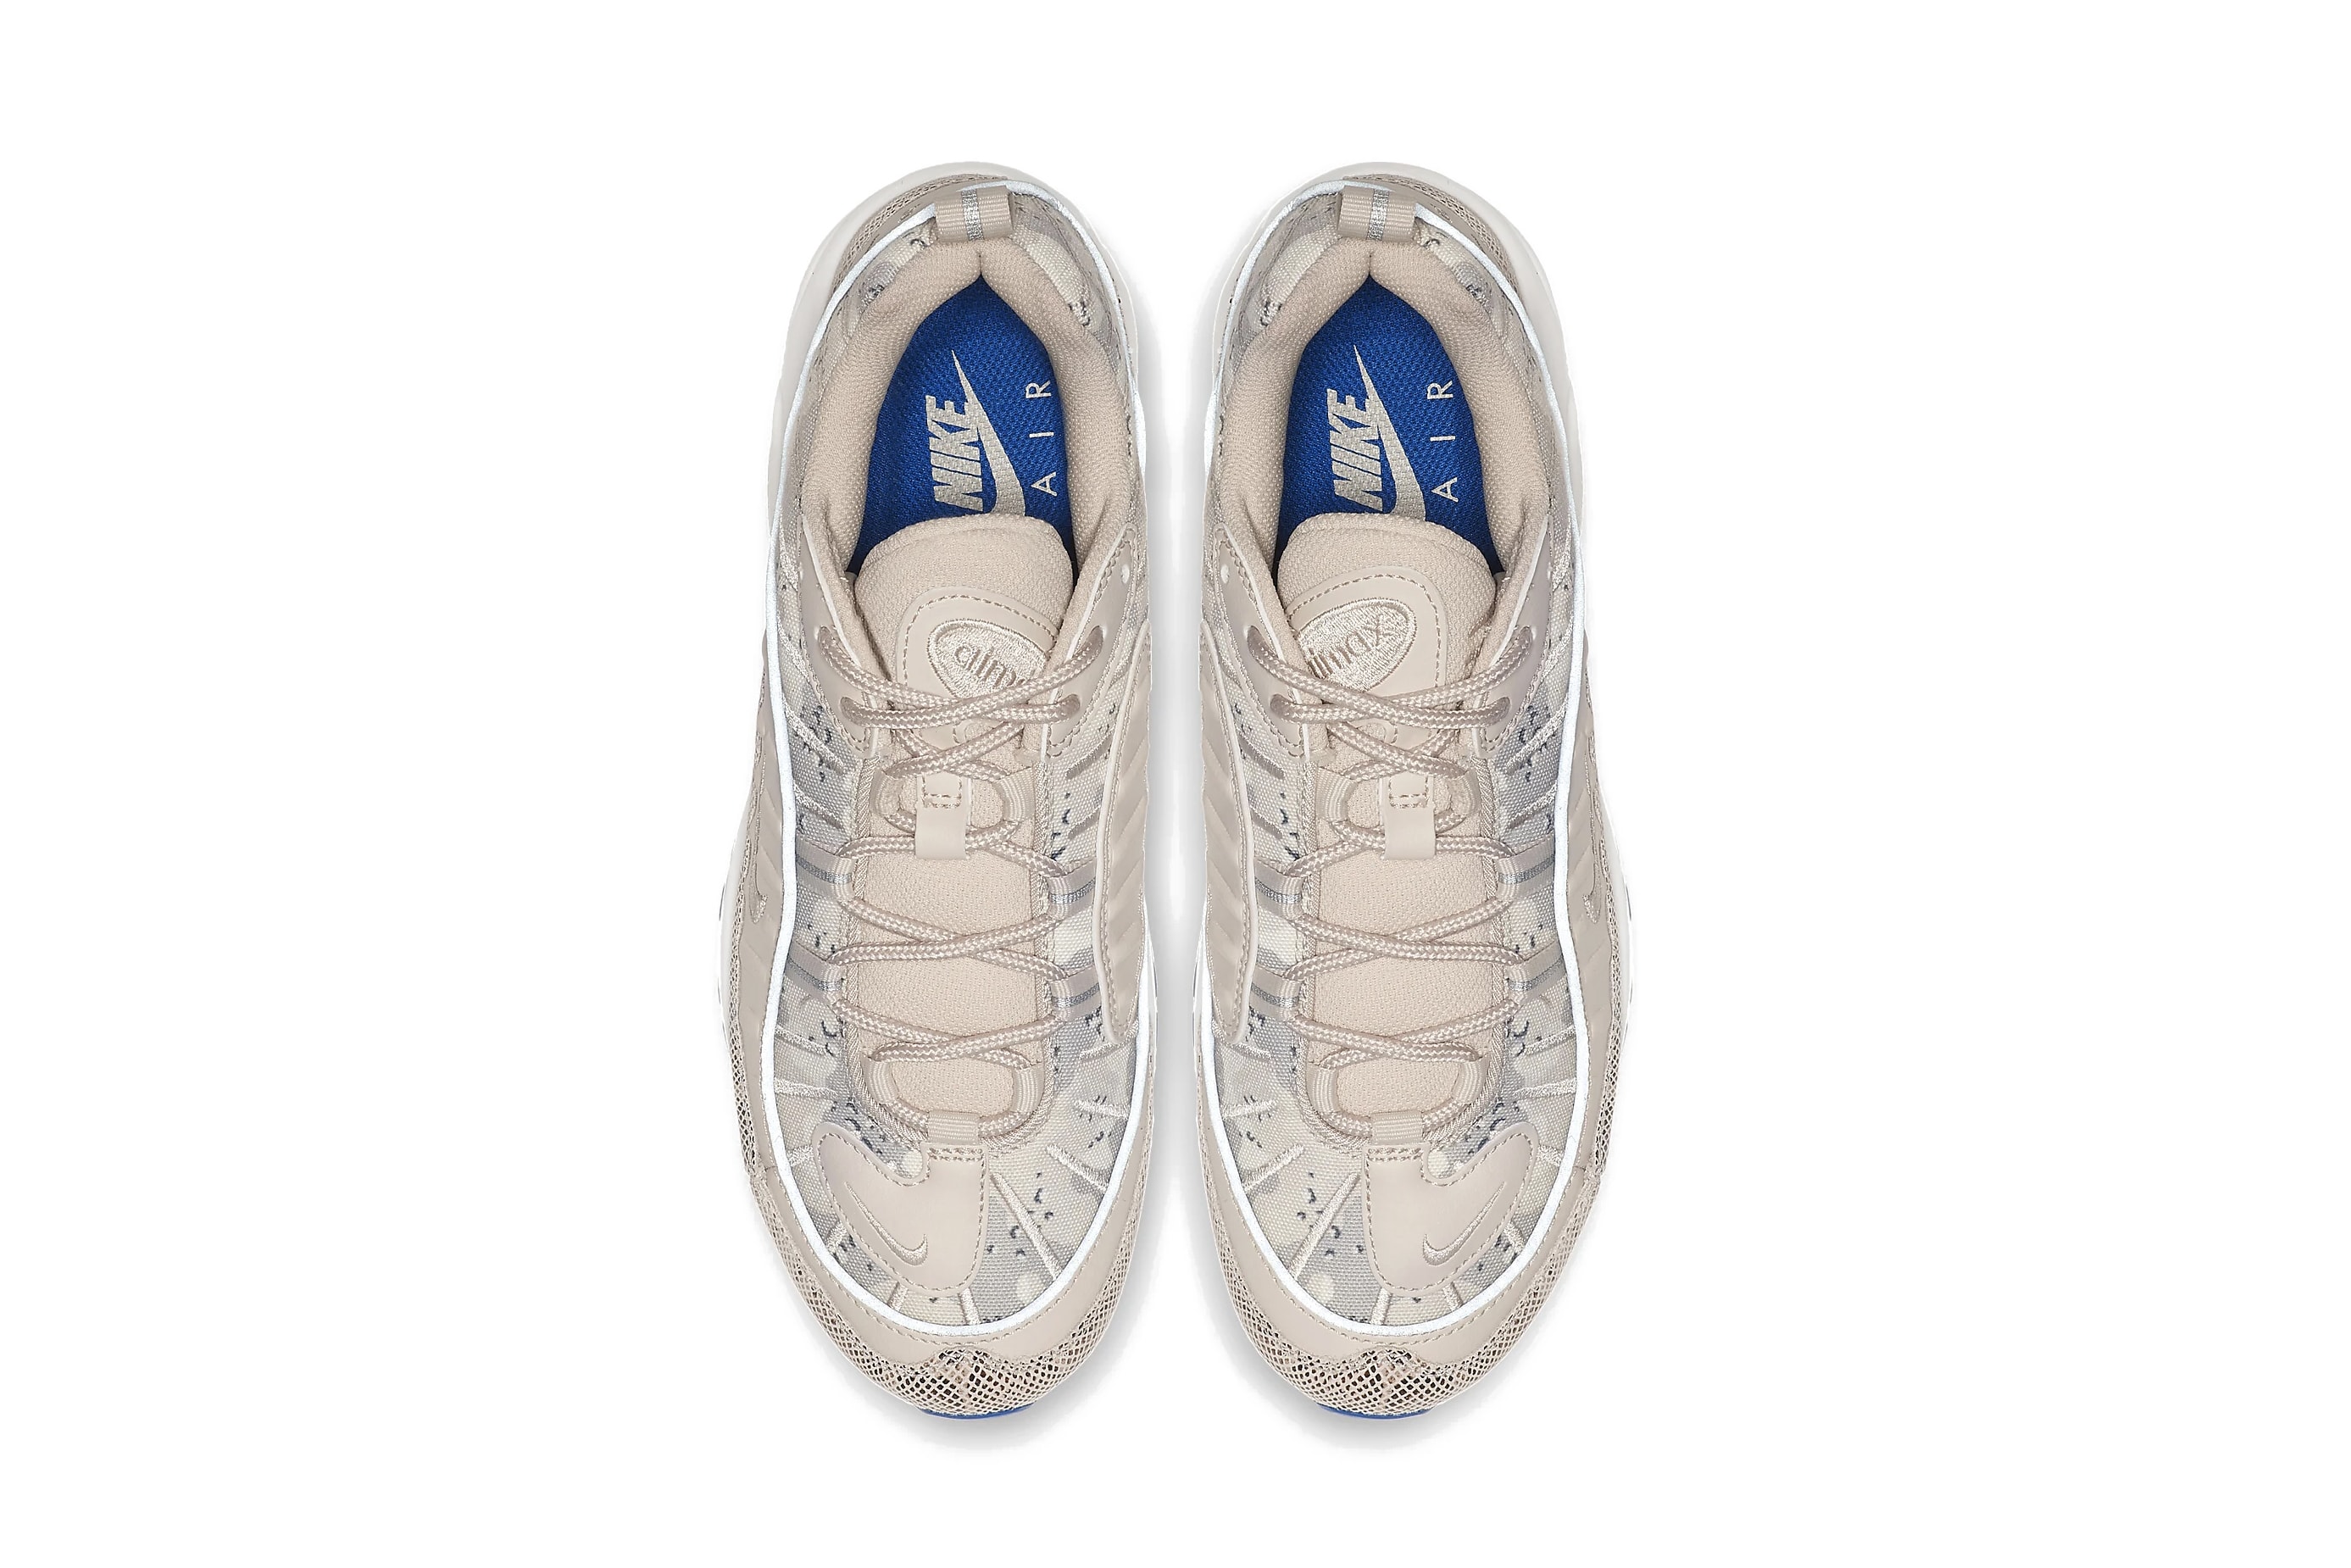 Nike Air Max 98 Premium "Camo" Sneaker Beige Blue Grey pattern texture upper shoe summer trainer